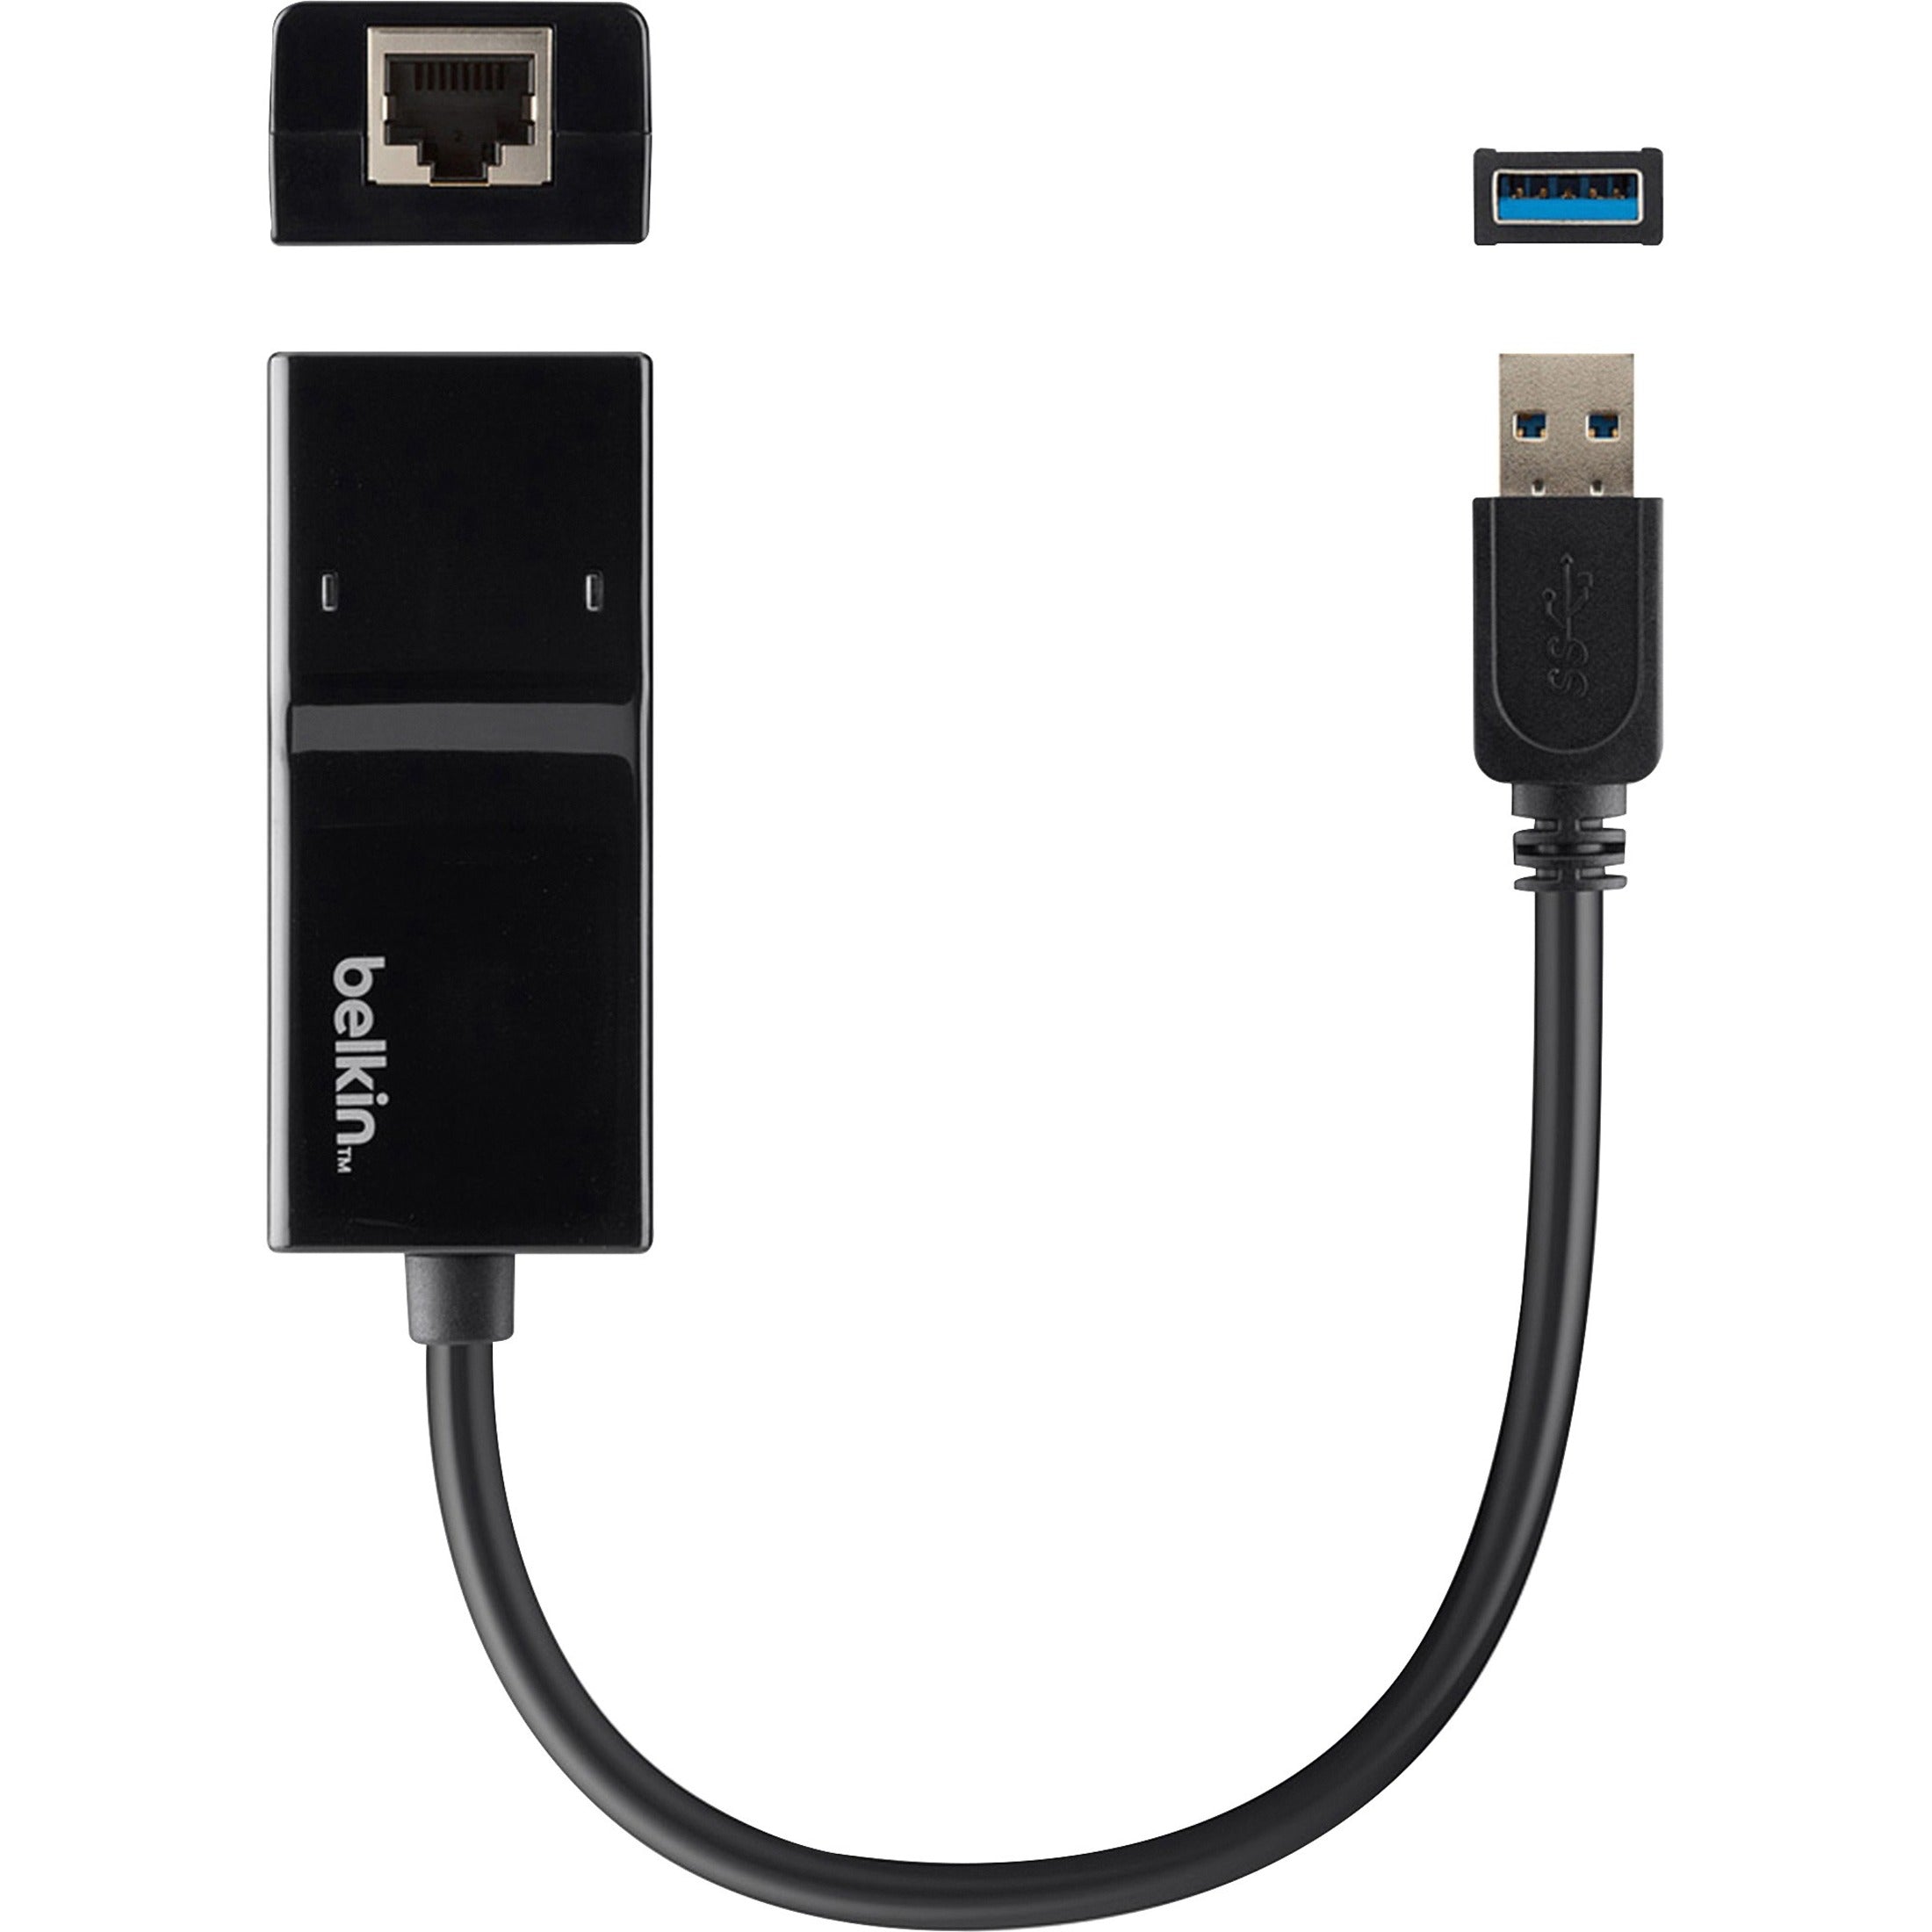 Belkin B2B048 Gigabit Ethernet Card, USB 3.0 to GBE Adapter